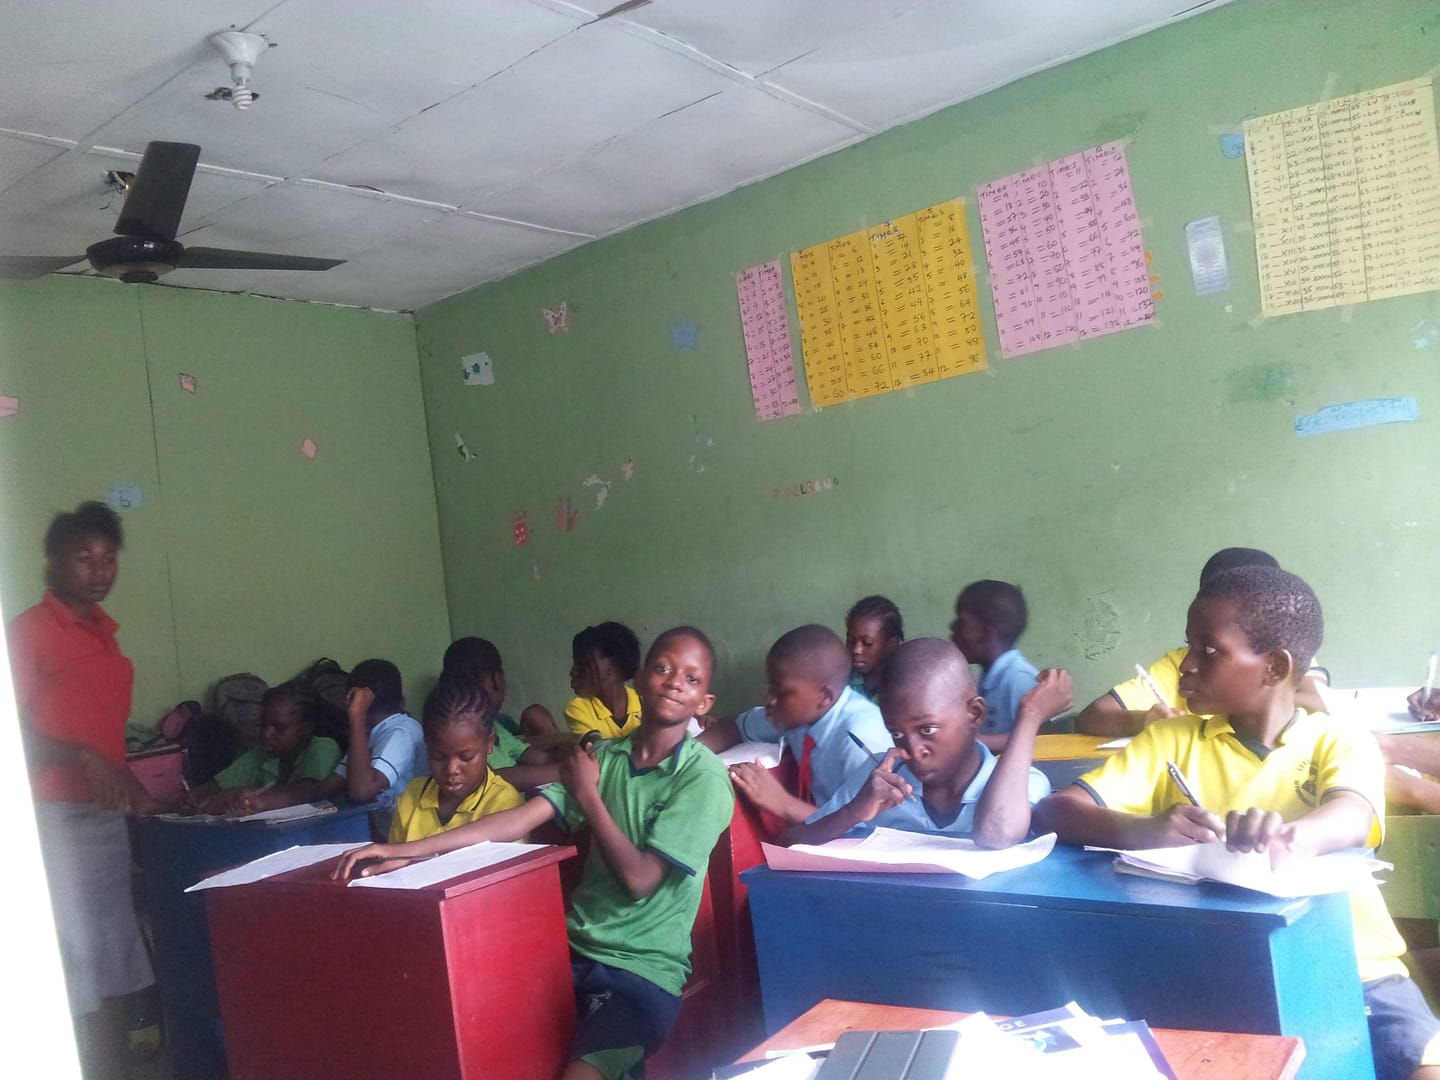 Students studying in the Lekki School classroom.